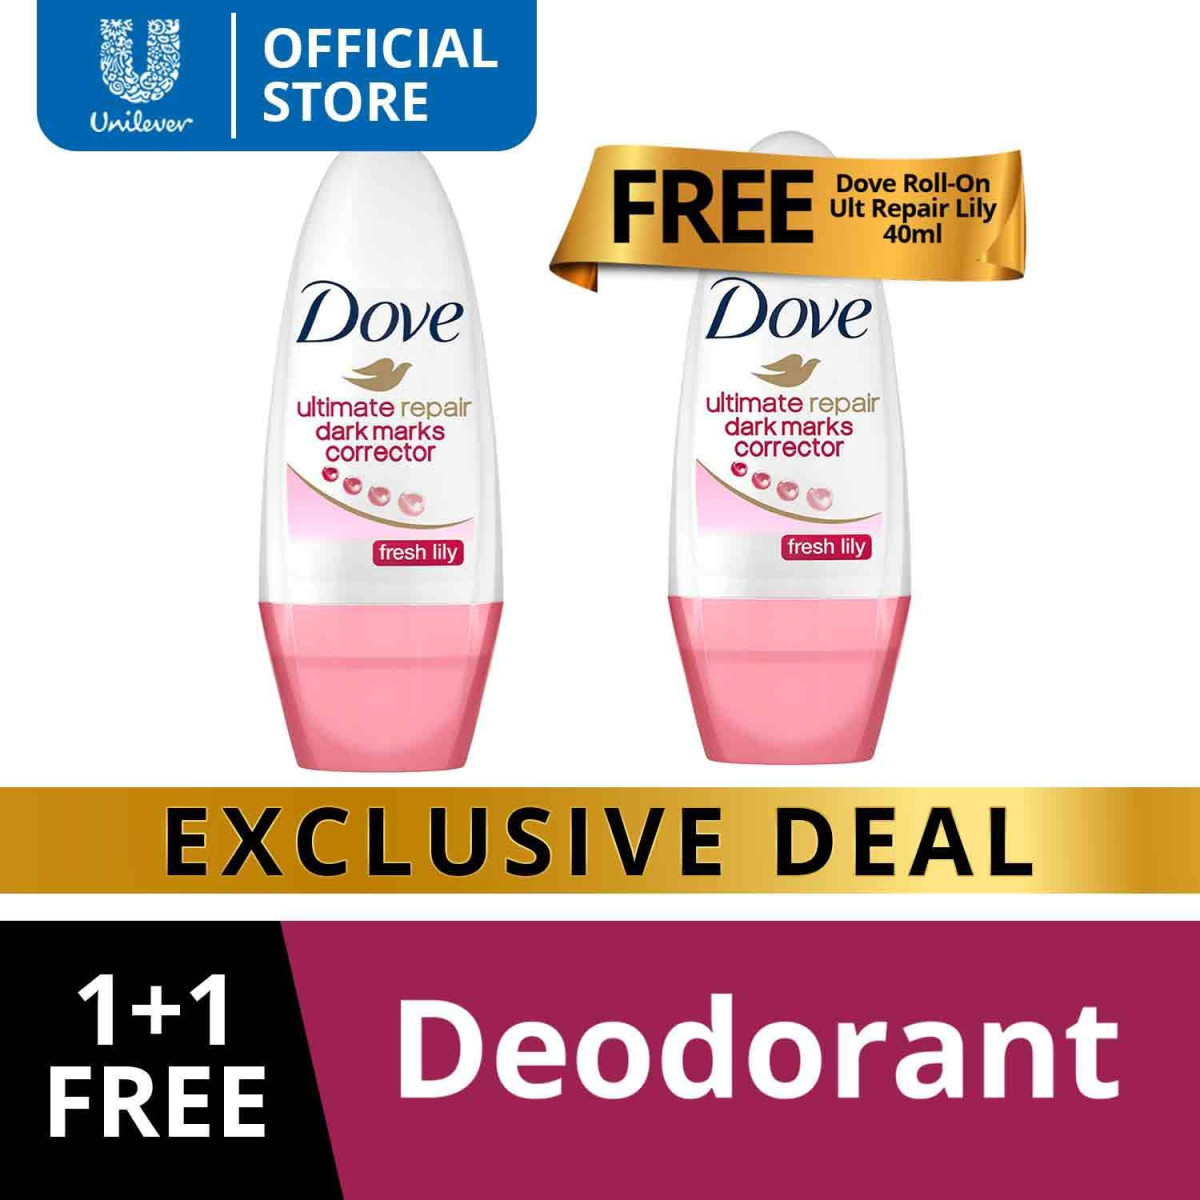 [BUY 1 TAKE 1] Dove Deodorant Roll-On Ultimate Repair Dark Marks Corrector Fresh Lily 40ML